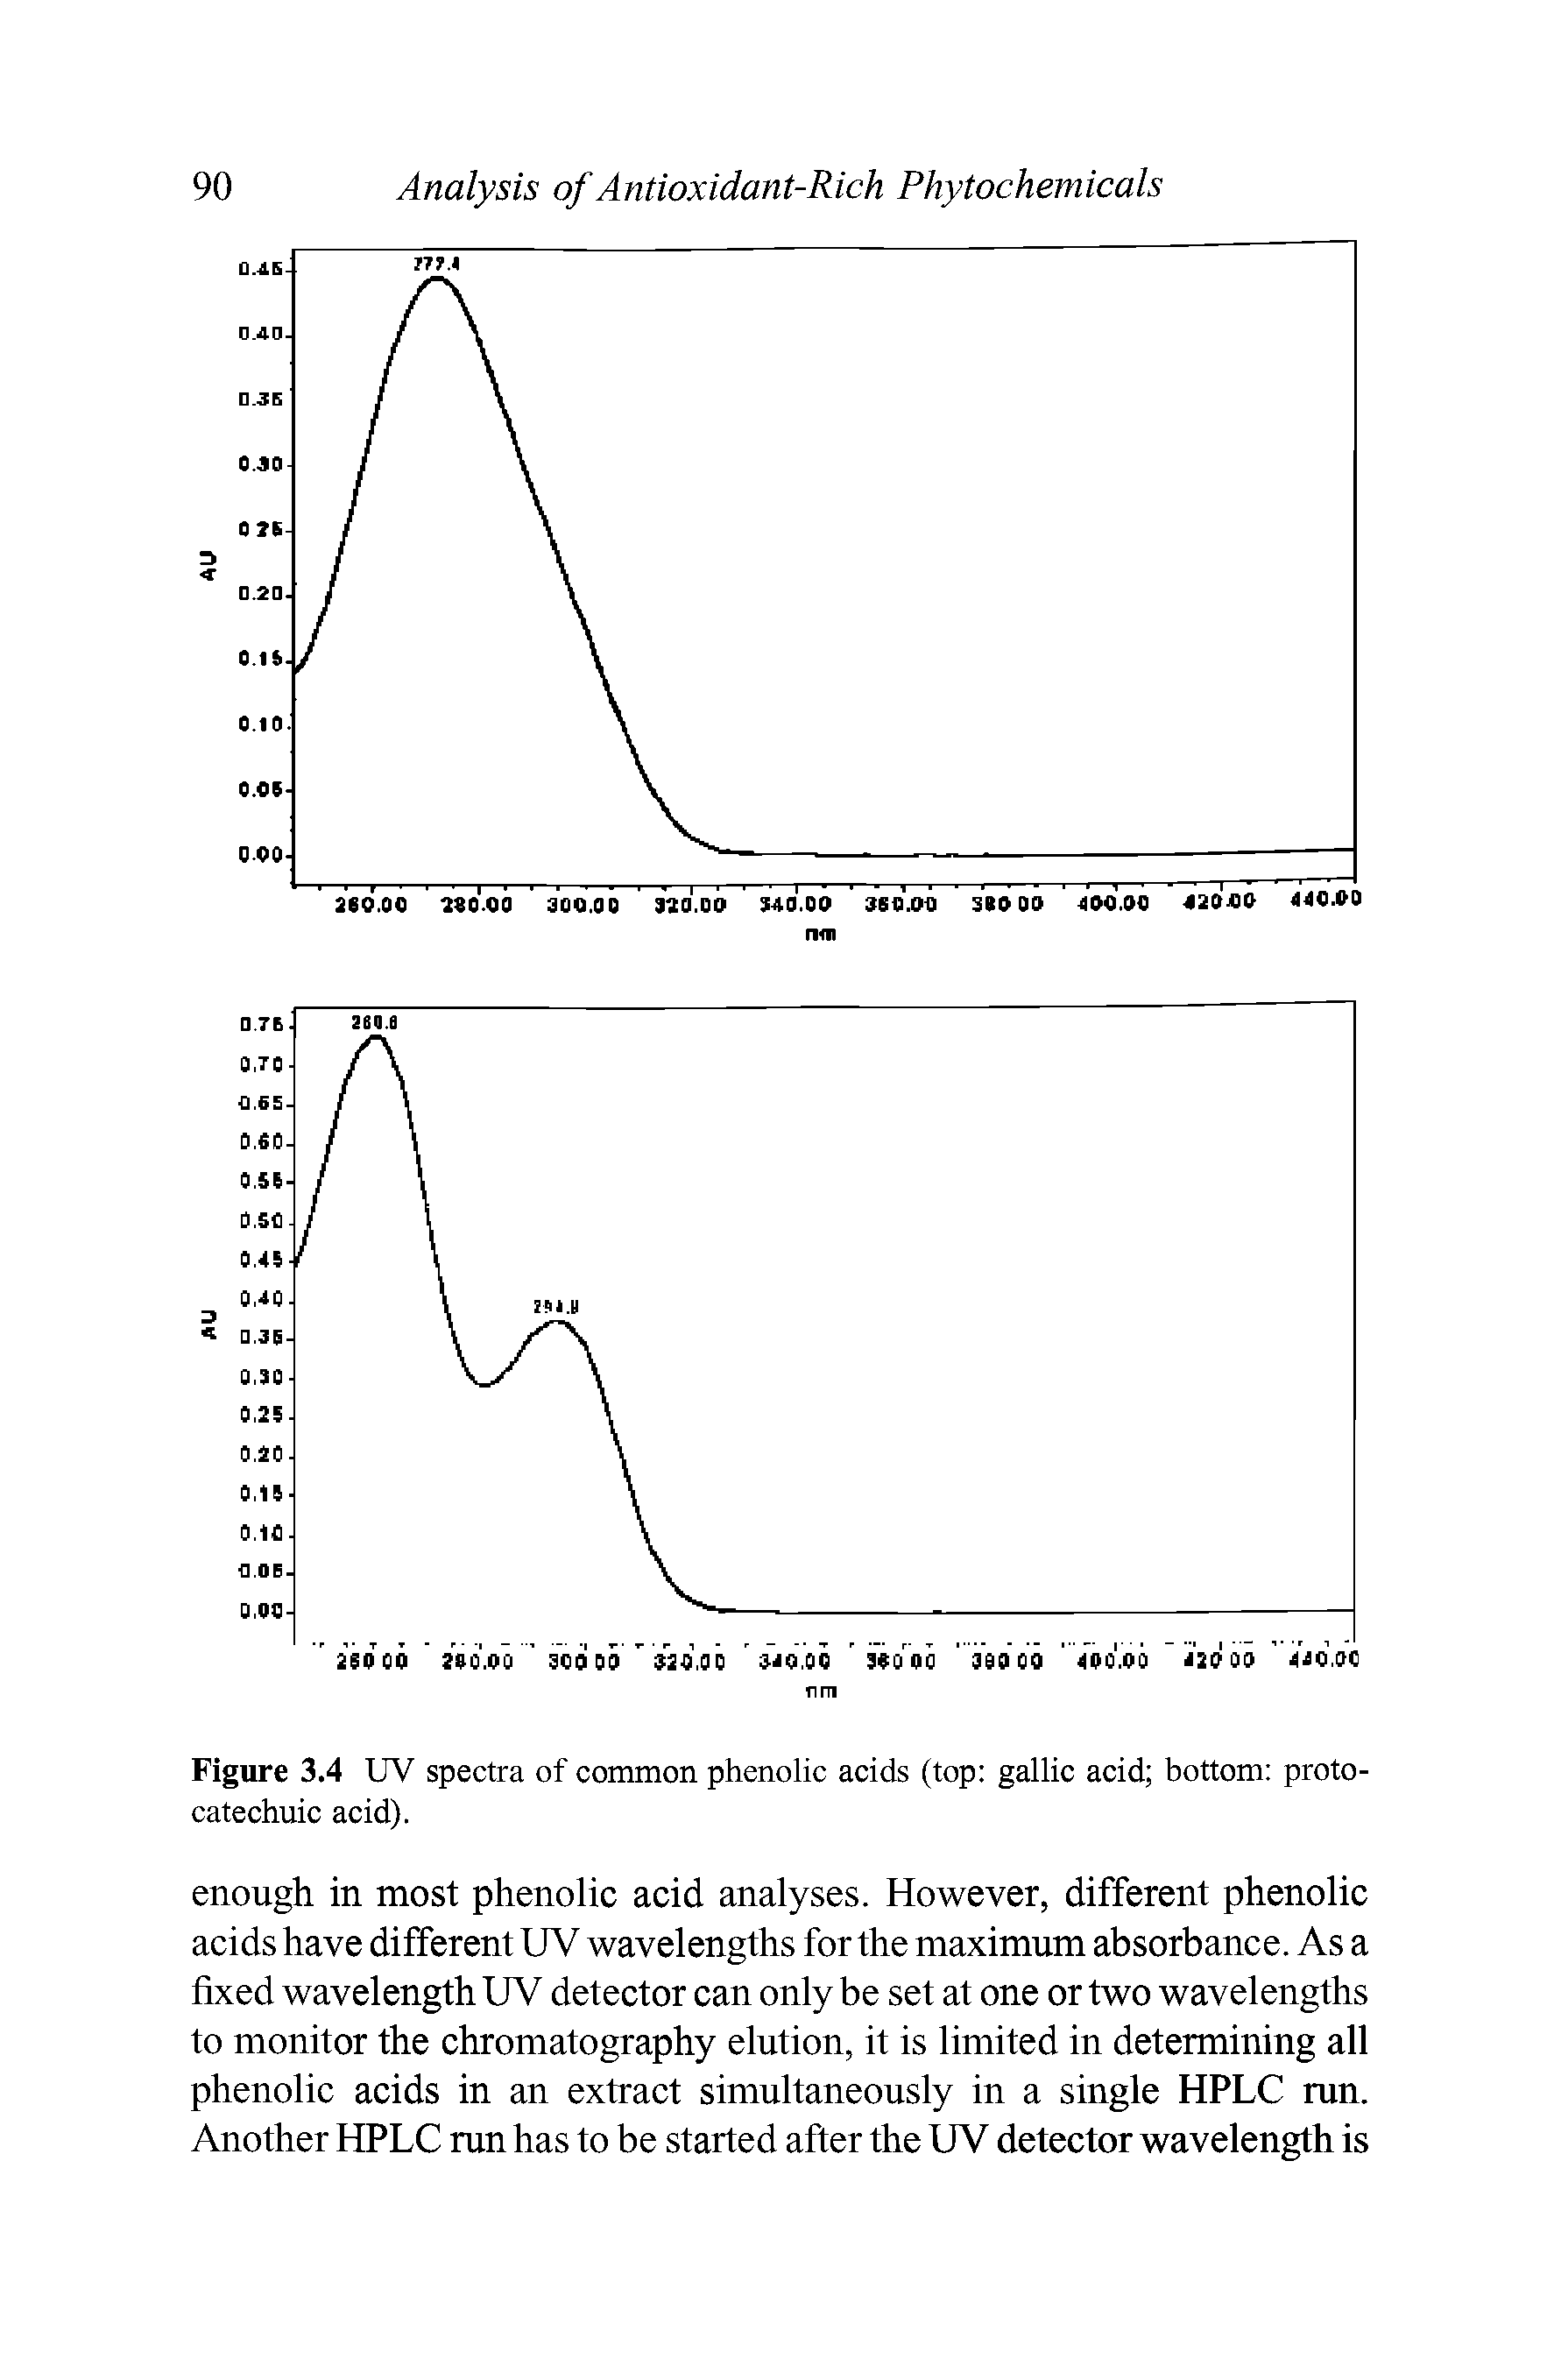 Figure 3.4 UV spectra of common phenolic acids (top gallic acid bottom proto-catechuic acid).